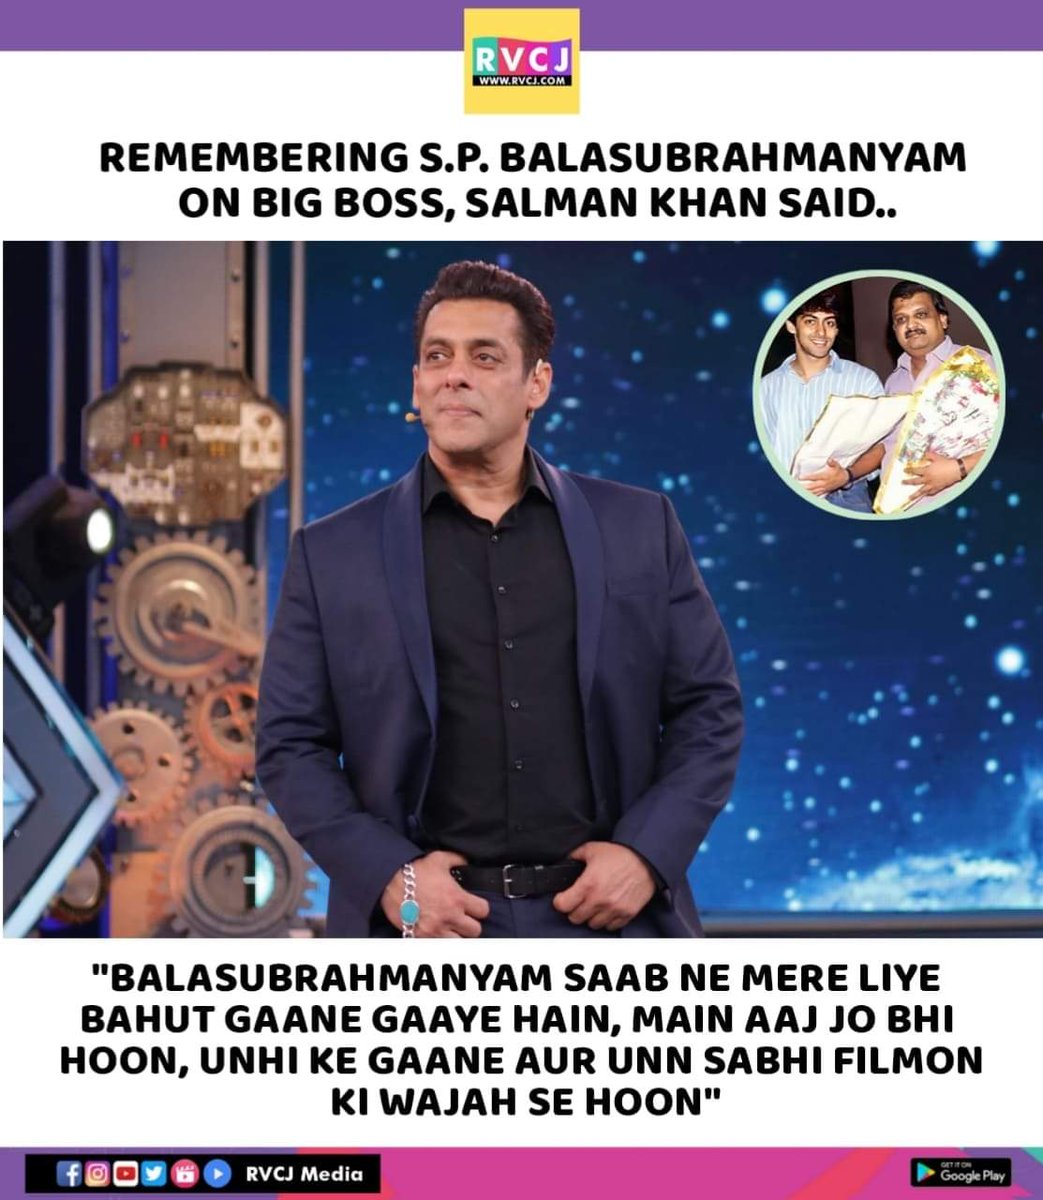 Salman Khan On S P BalaSubramanyam Ji ❤️
#salmankhan #movie #bollywood #celebrity #singing
#RIPSPB
 #ripspbalasubramaniyam #restinpeace #rvcjmovies